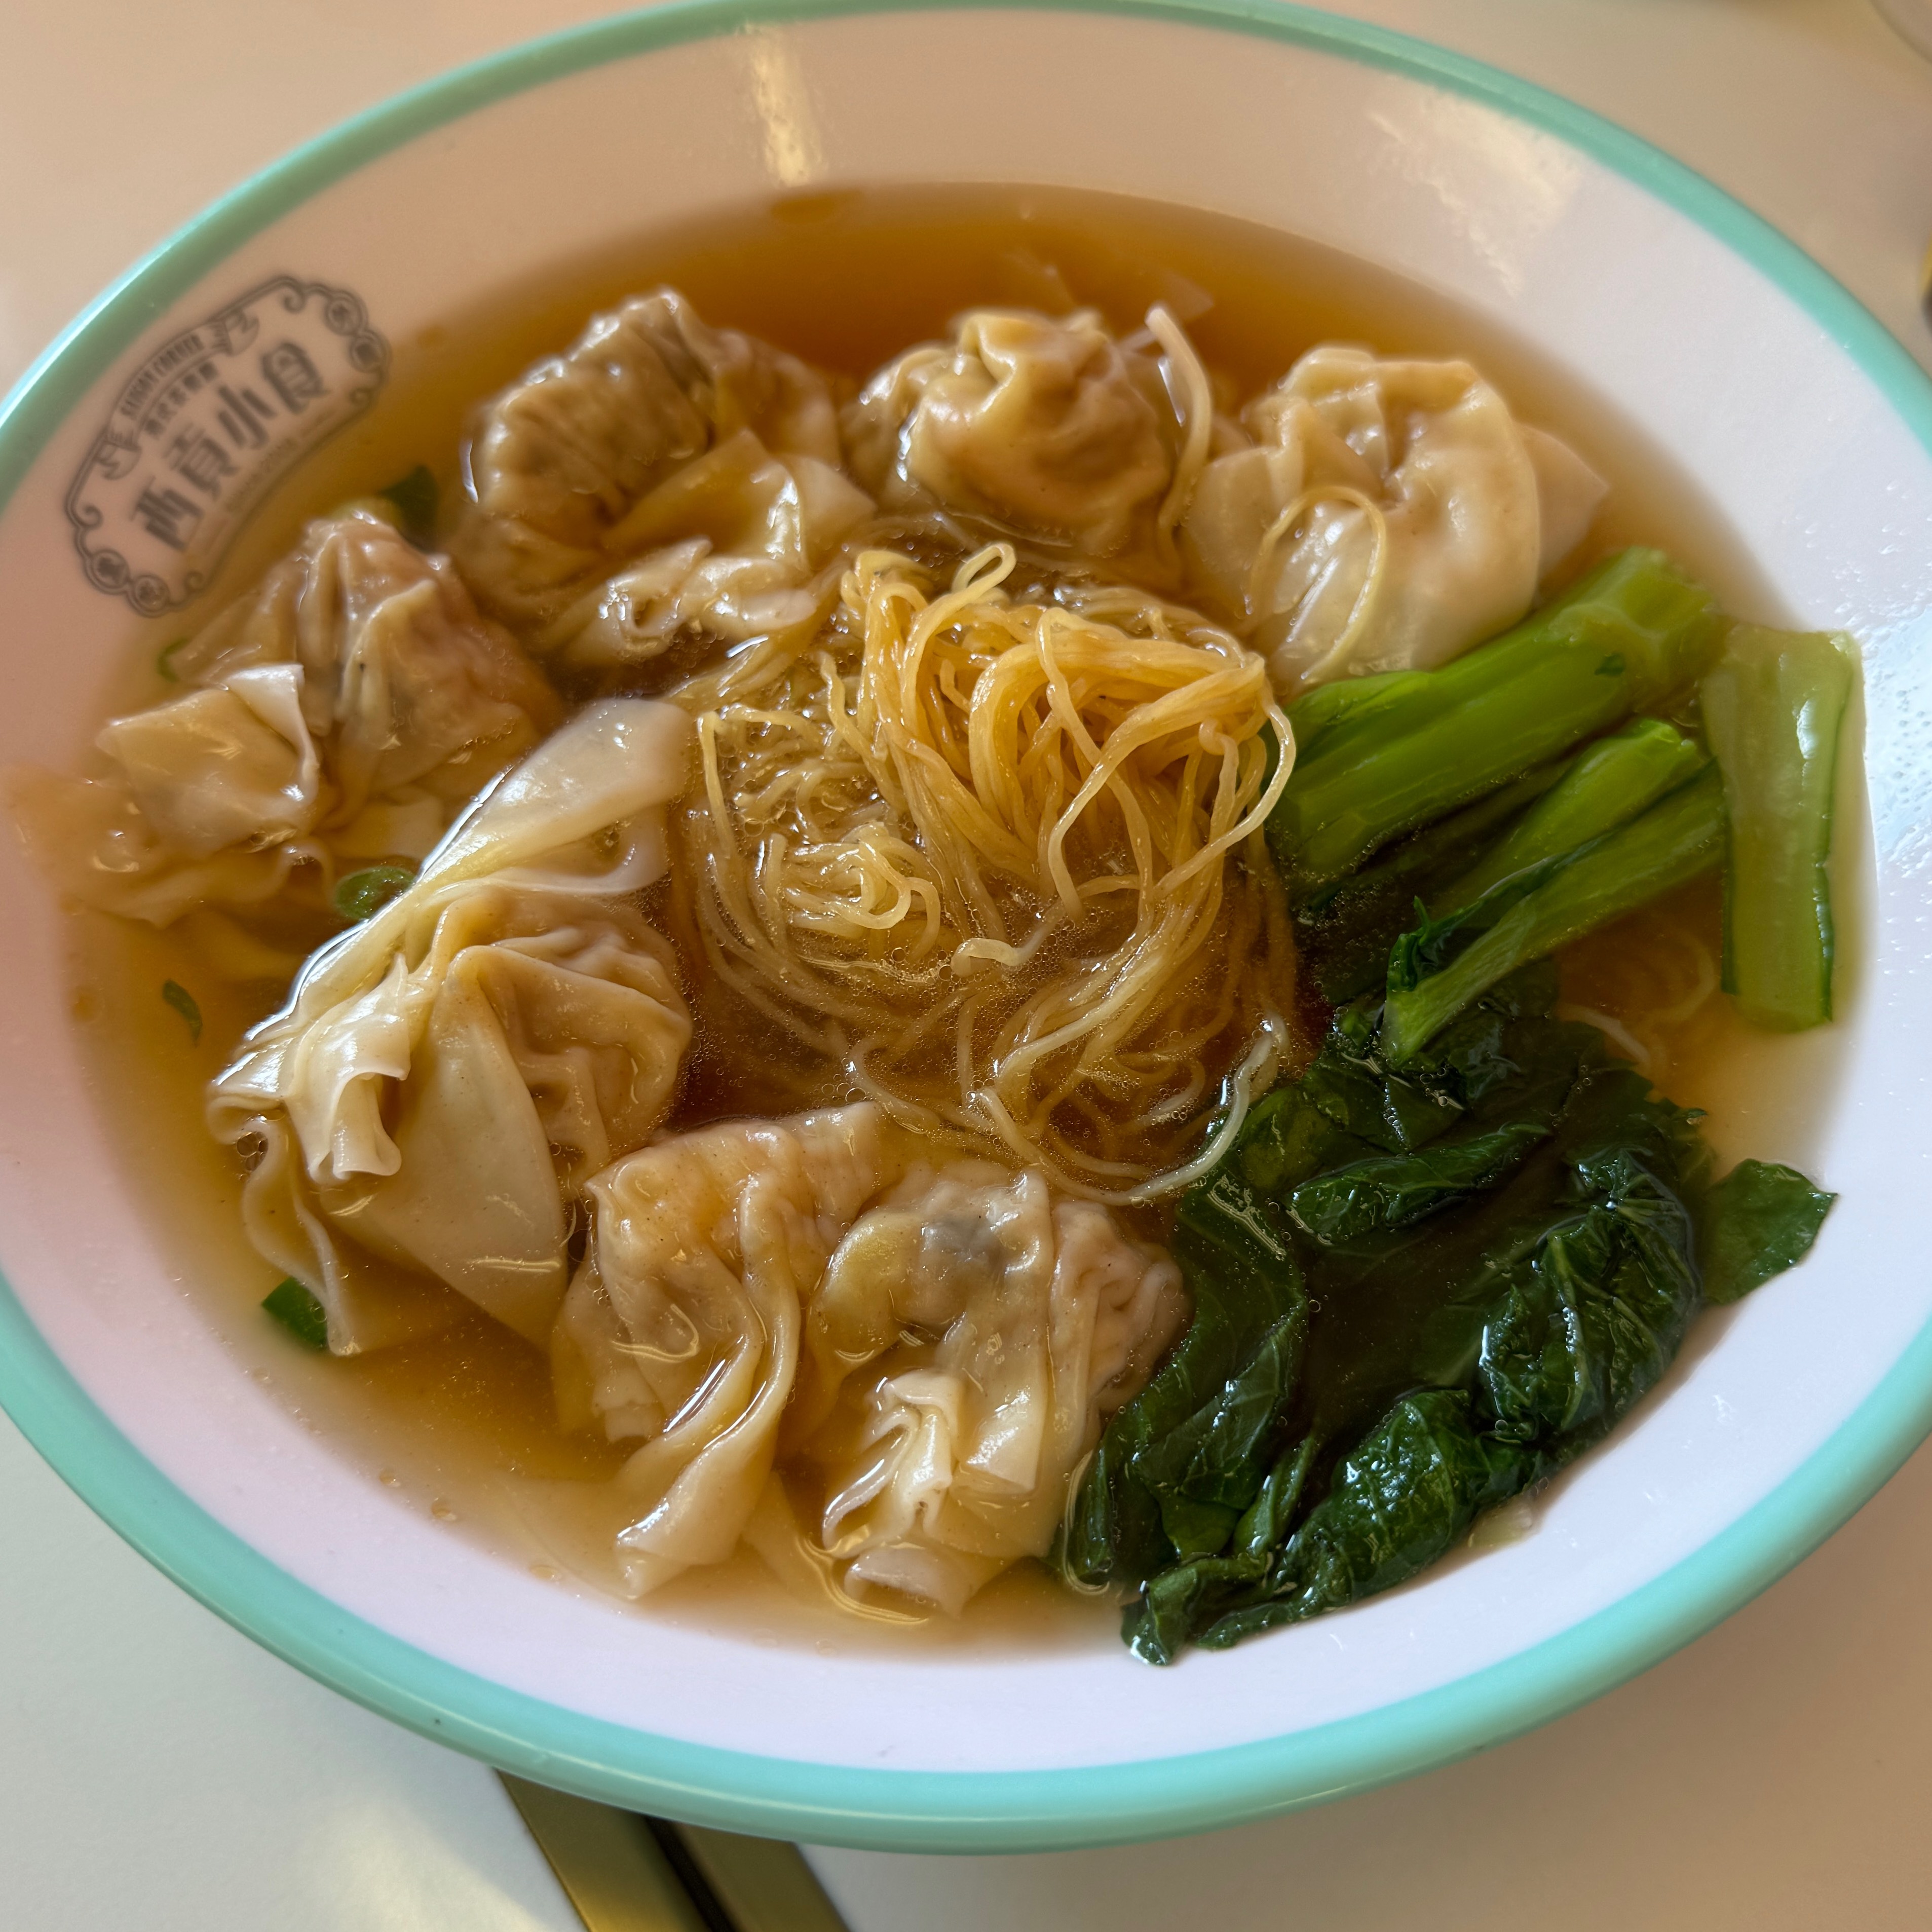 Dumpling & Wonton Noodle Soup $10 at Saigon corner on #foodmento http://foodmento.com/place/14837